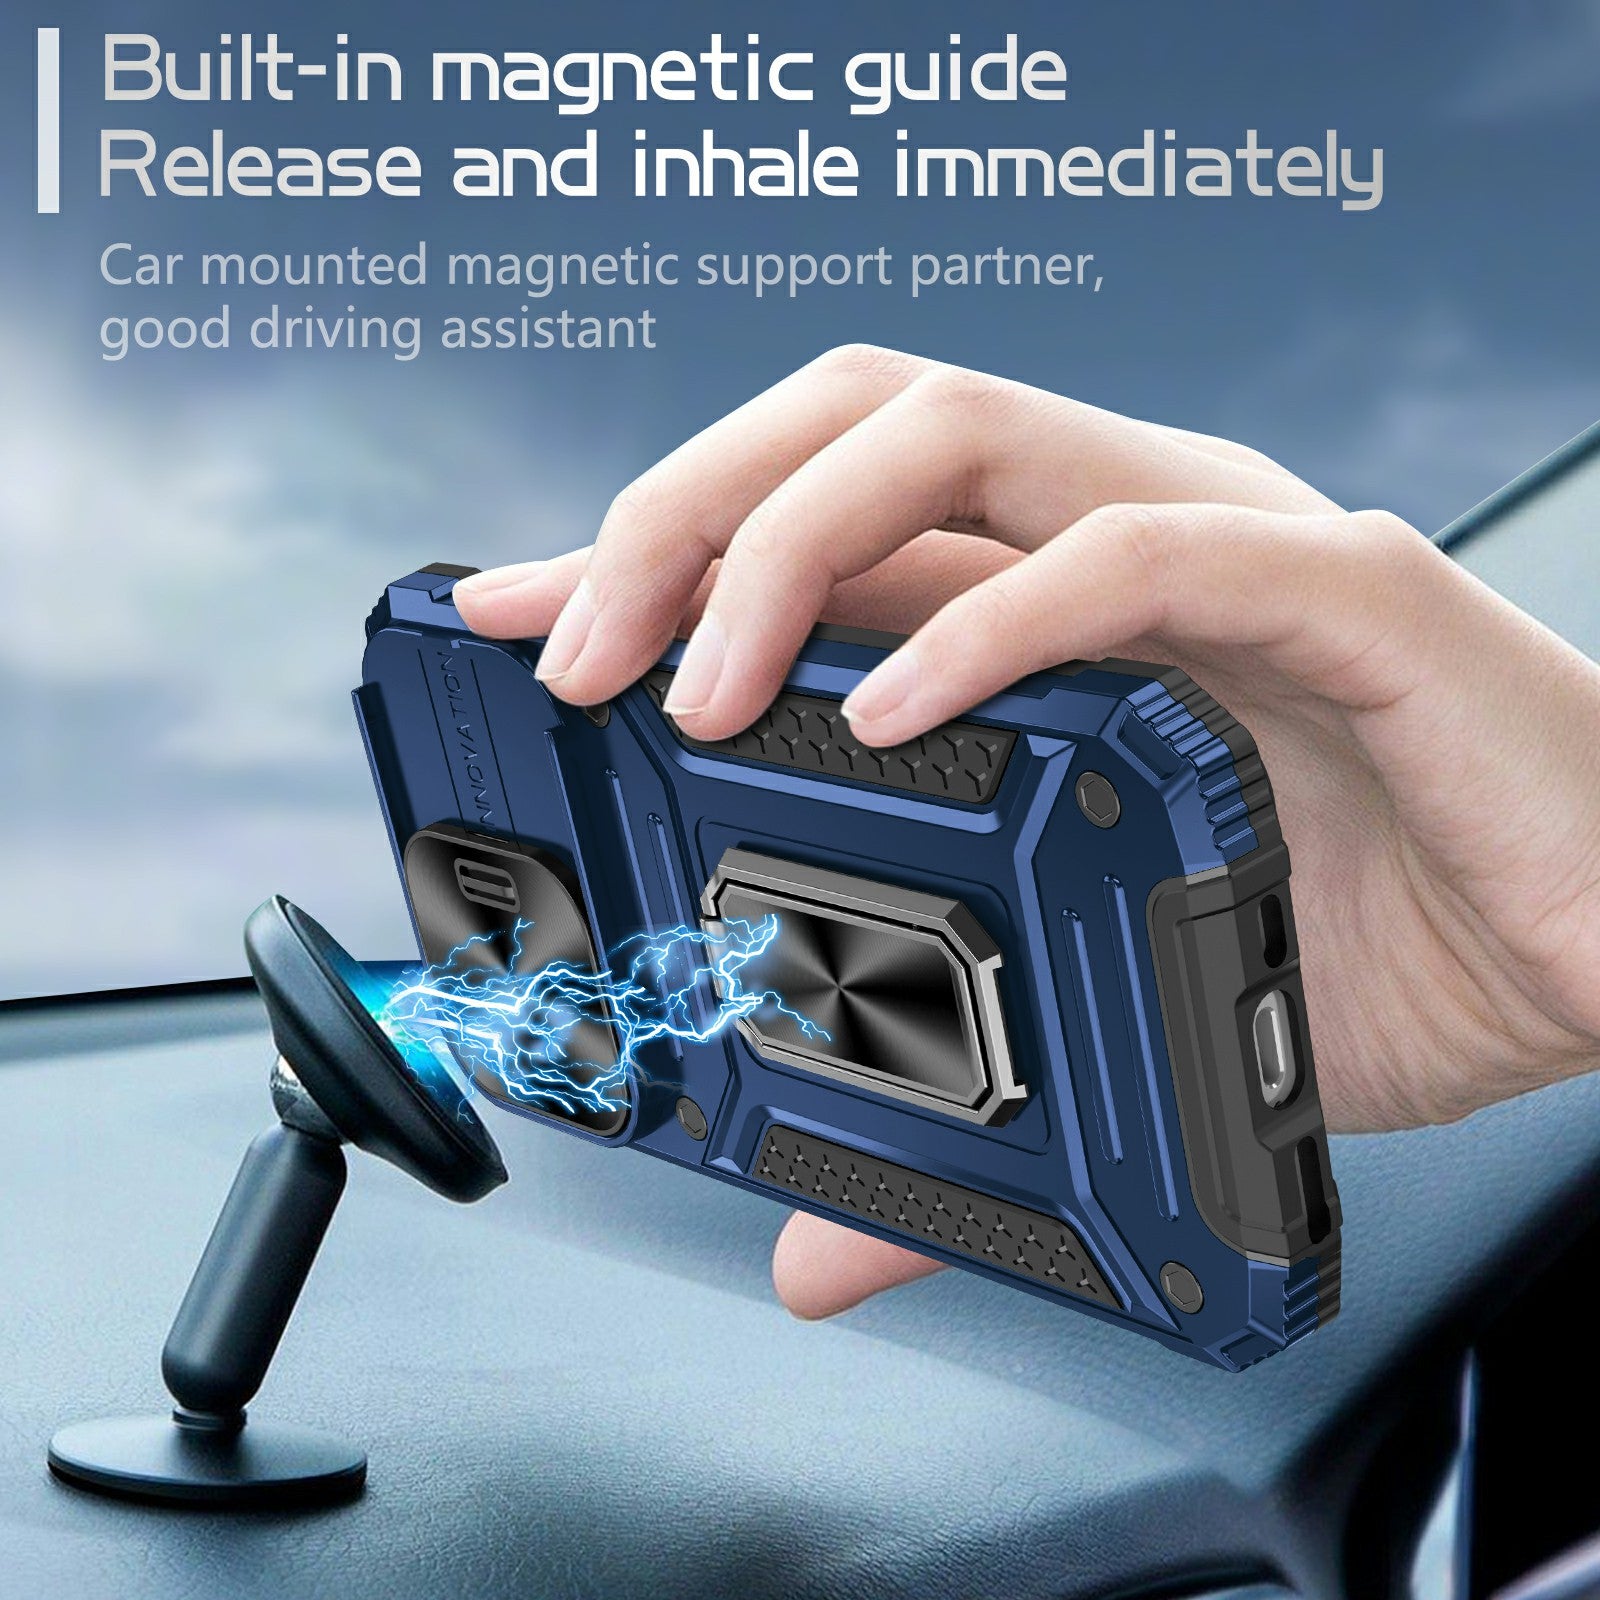 Uniqkart for iPhone 15 Pro Max Kickstand Phone Case PC+TPU Slide Camera Protection Phone Cover - Blue